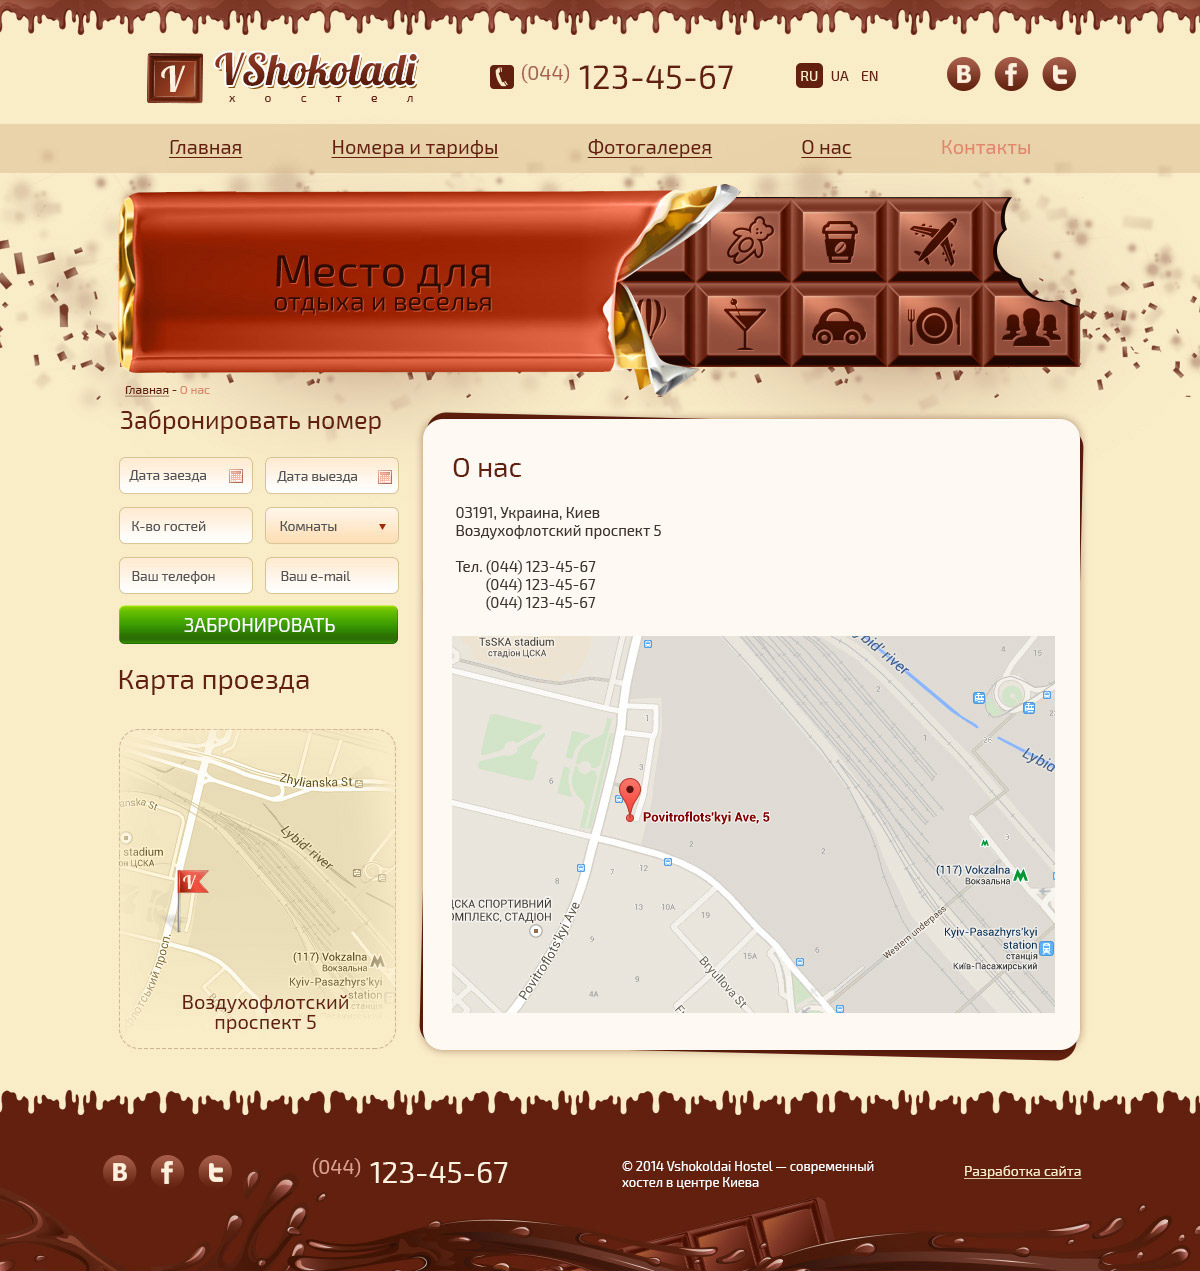 Contact page design of Vshokoladi website